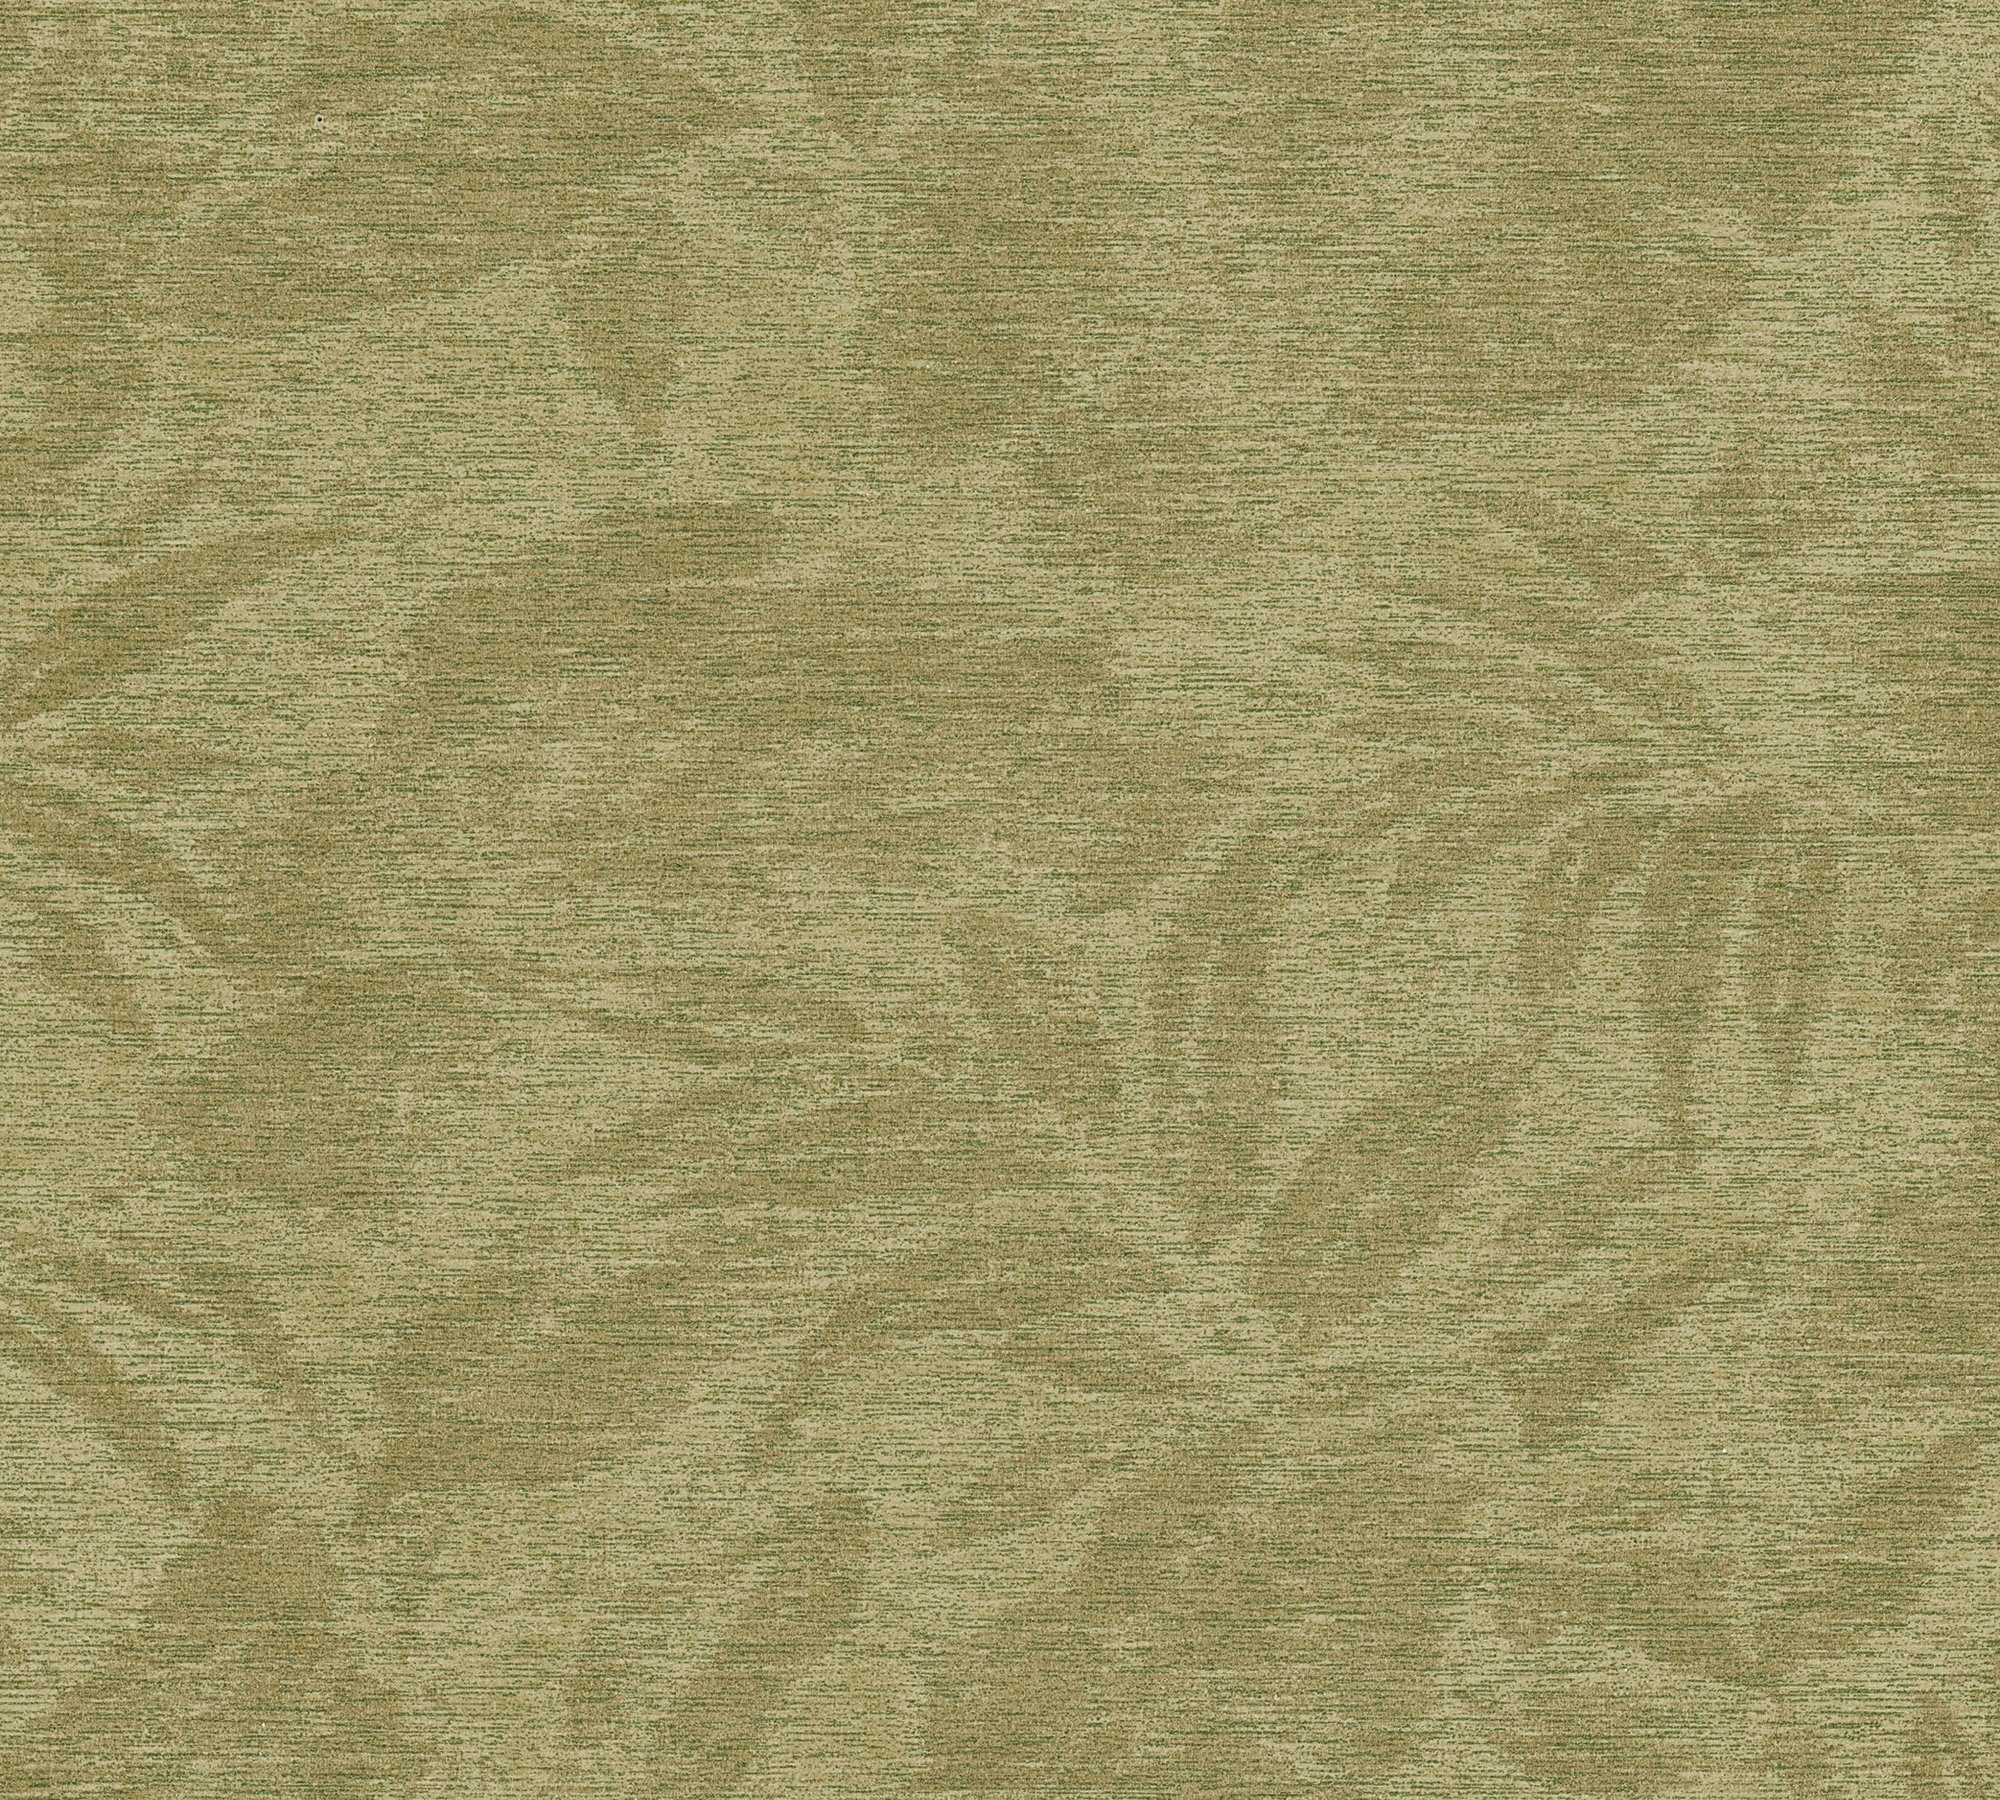 A.S. Motiv, Tapete Création Greenery Vliestapete grün/beige Dschungel Blätter mit Palmentapete floral,